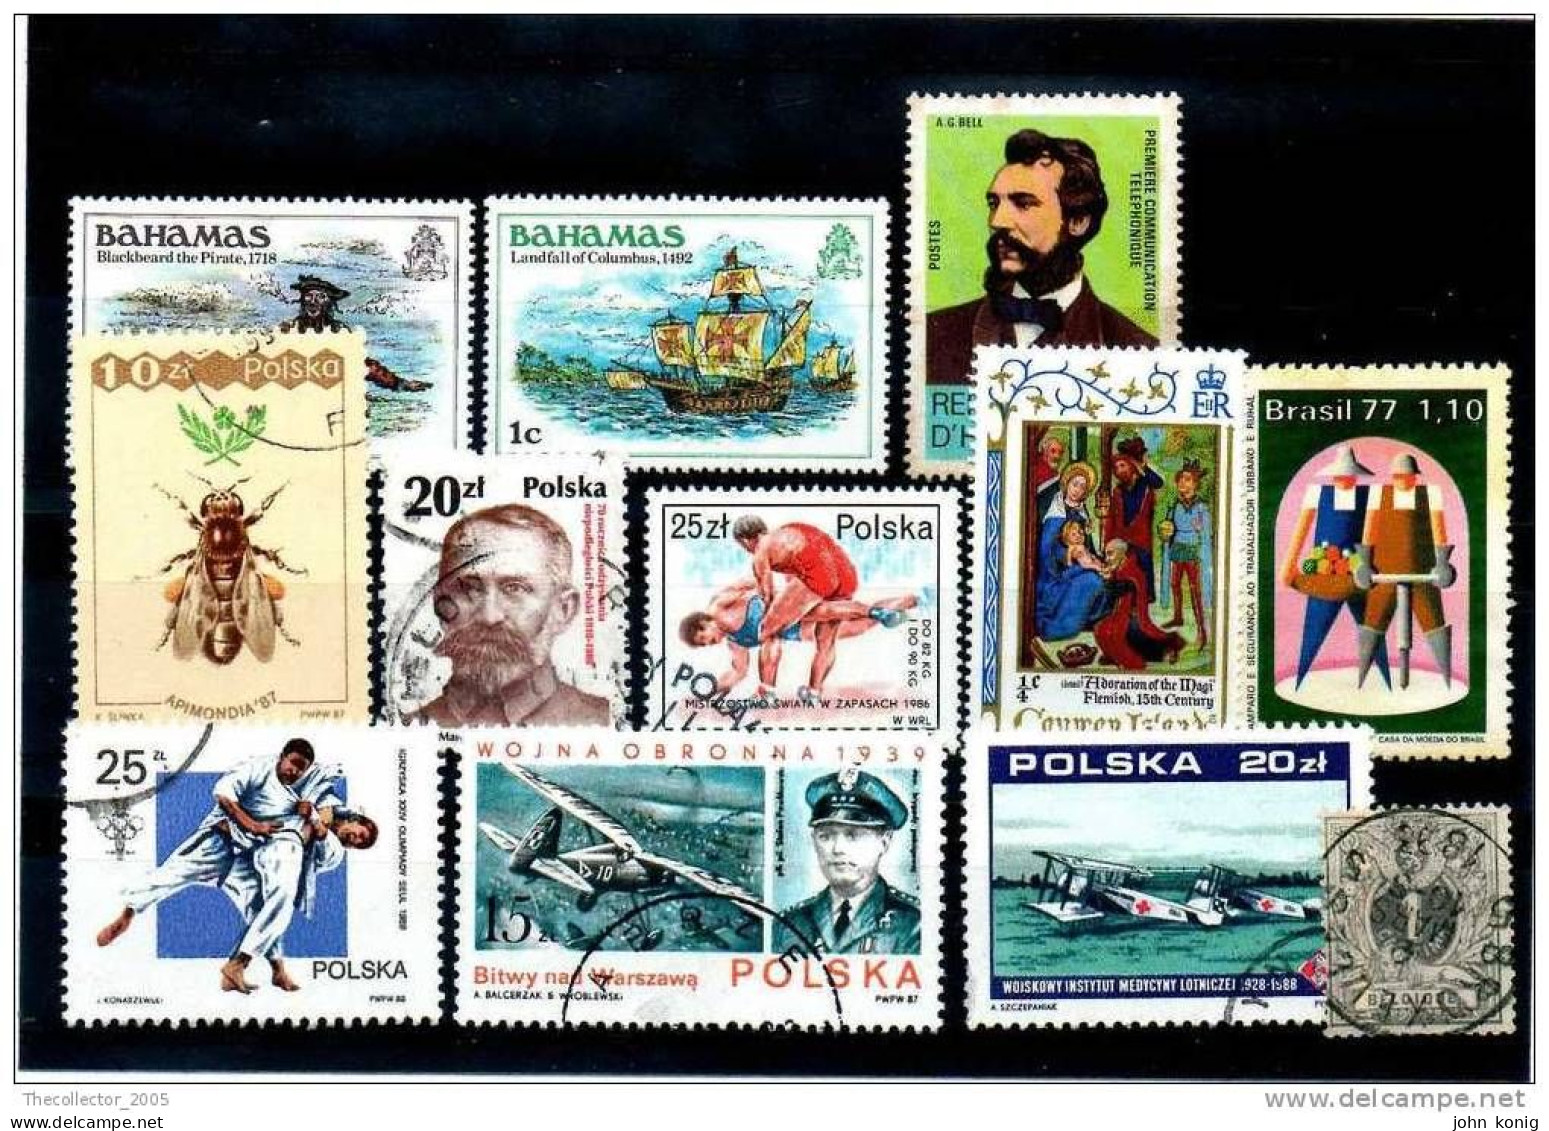 POLSKA BAHAMAS BRASIL - BRASILE POLONIA BAHAMAS - Lotto Francobolli Nuovi & Usati - Mixed Lot Of New & Used Stamps - Collezioni